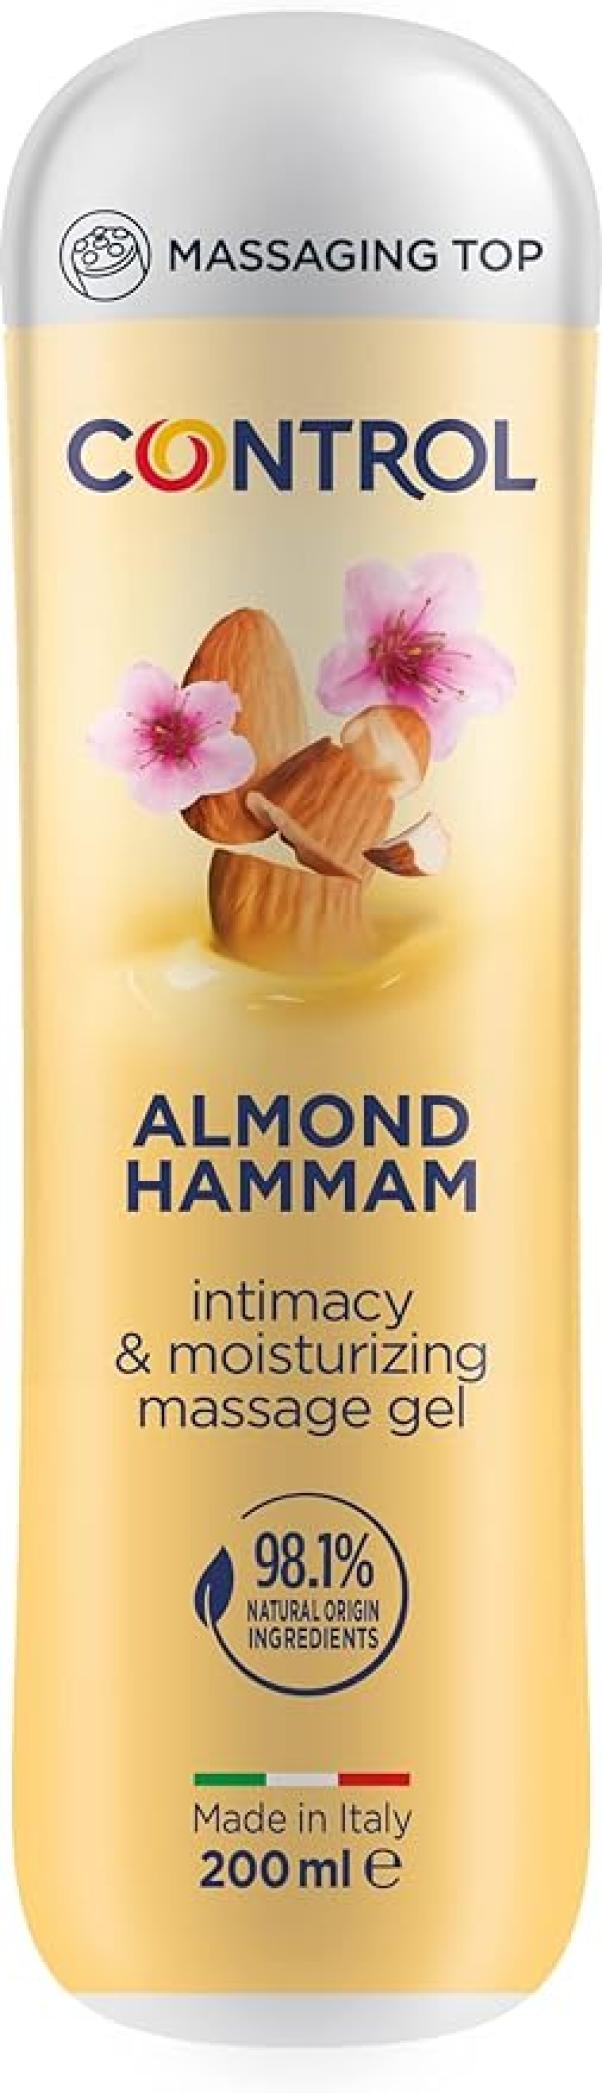 Gel Control almond hammam 200ml